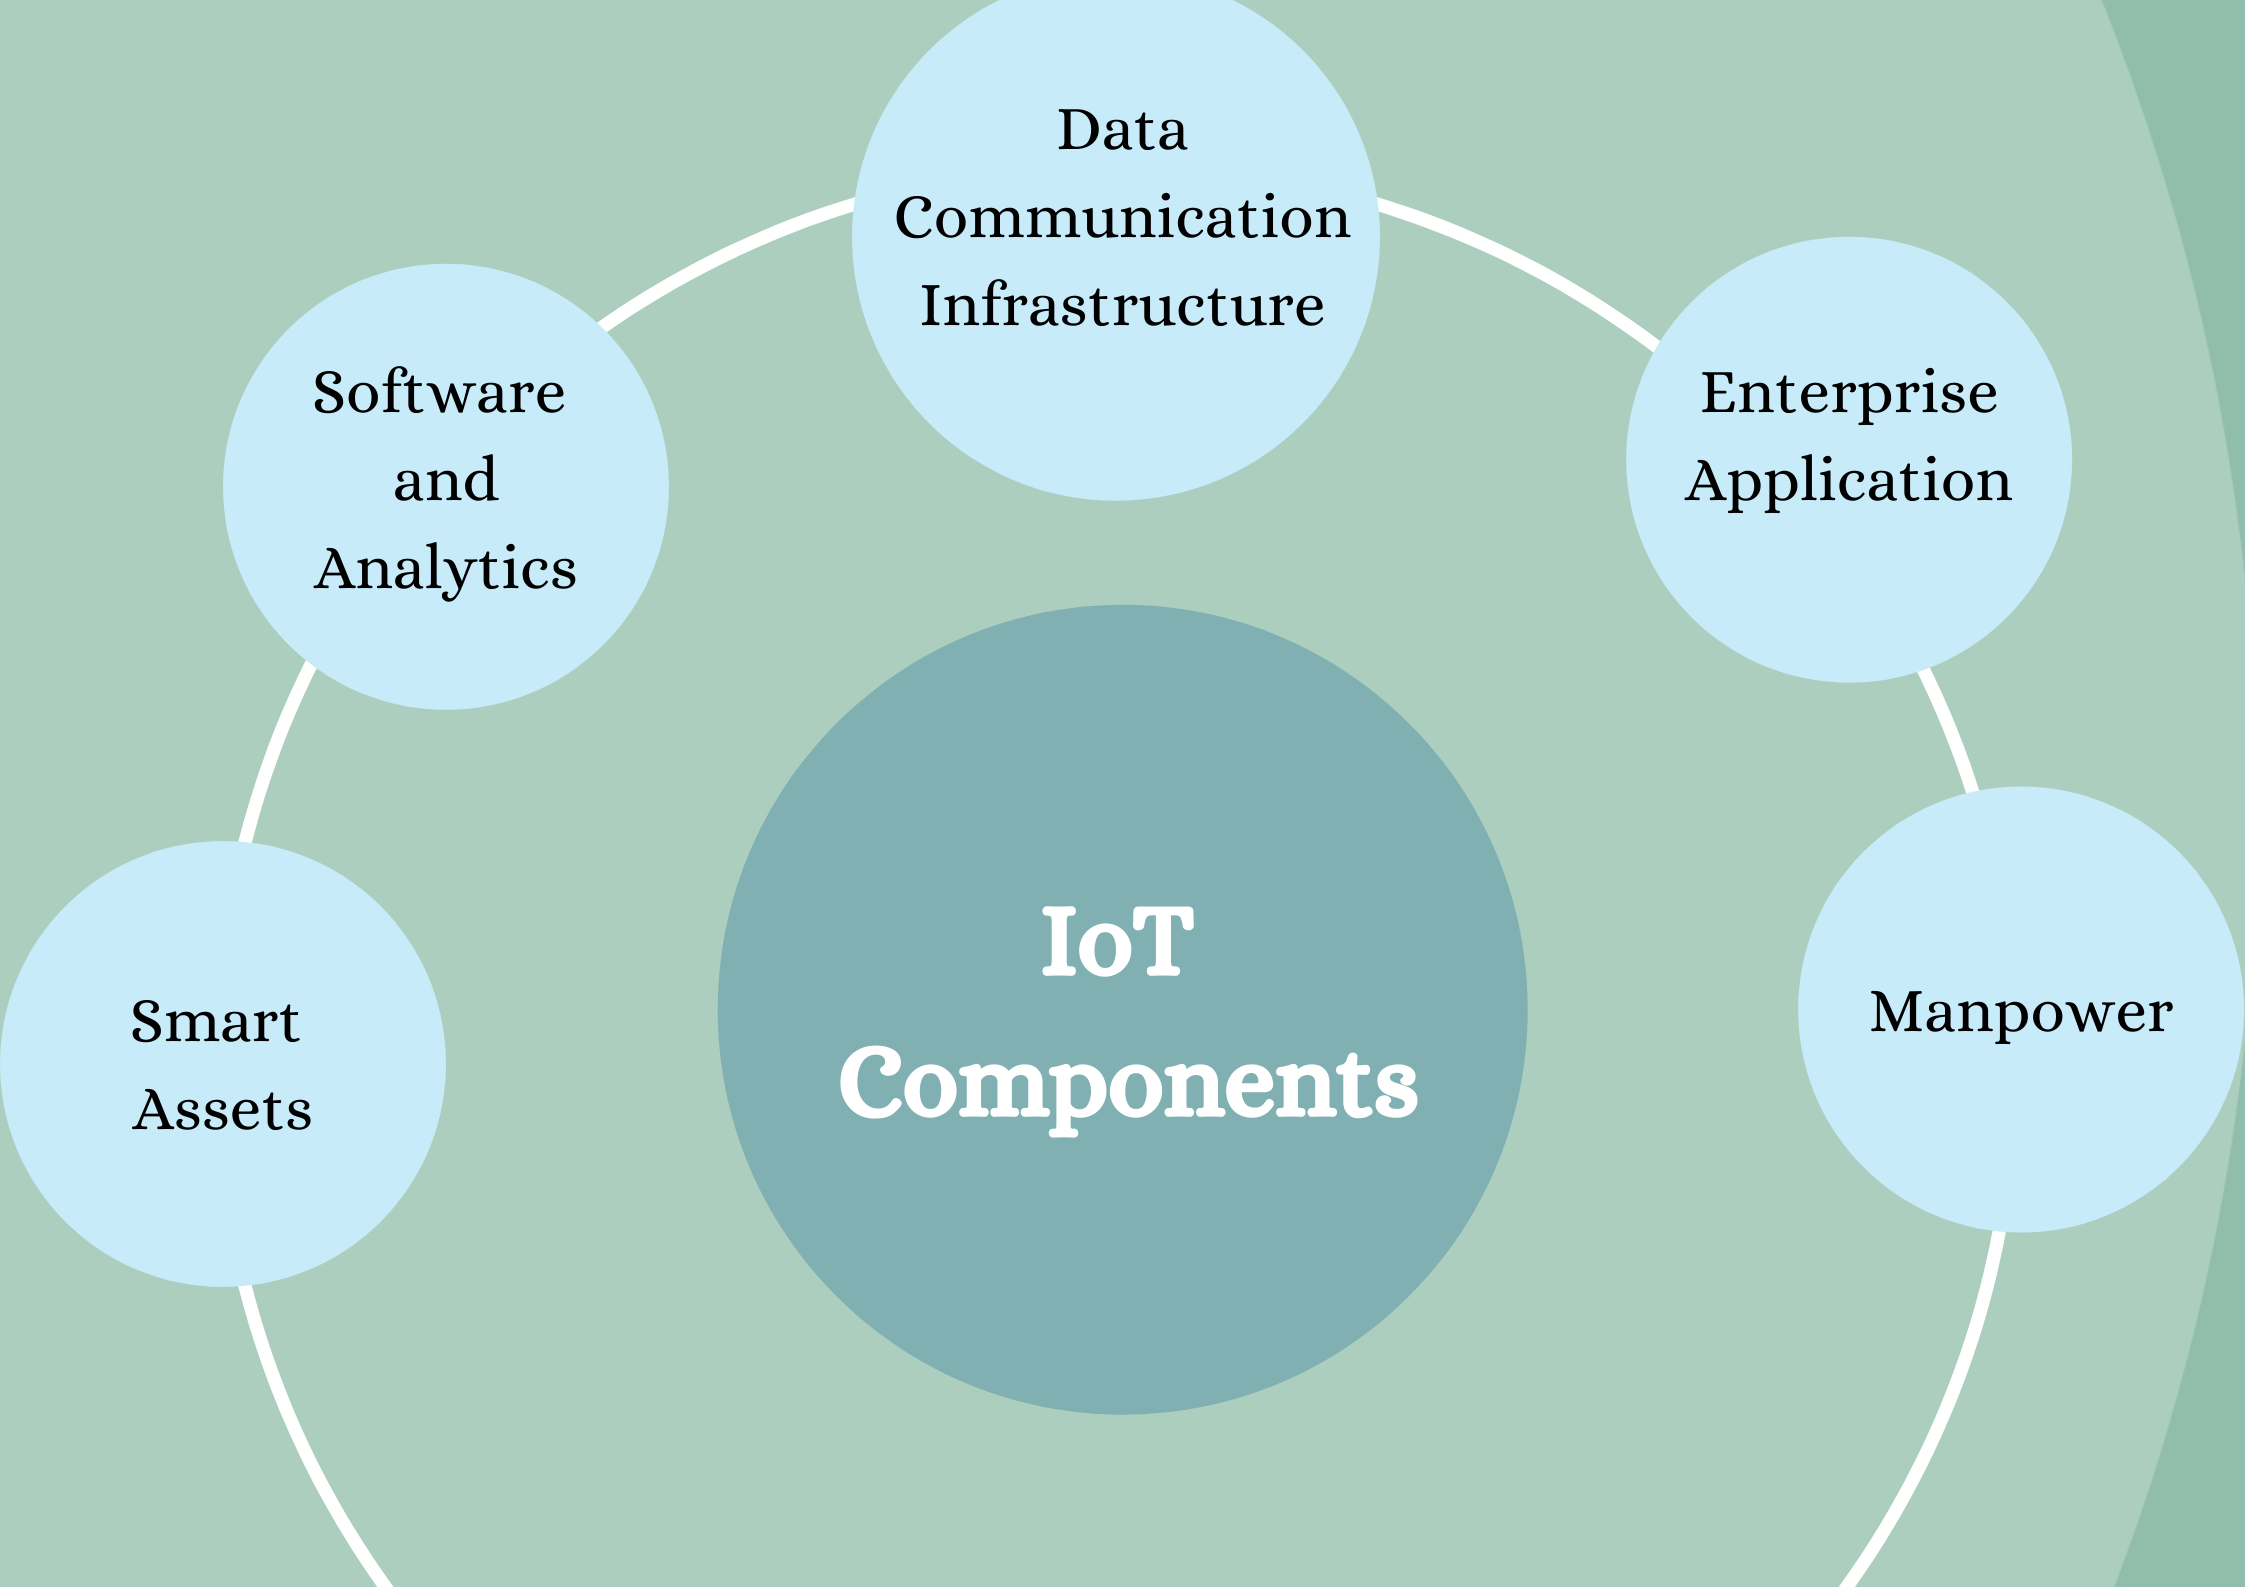 IoT components